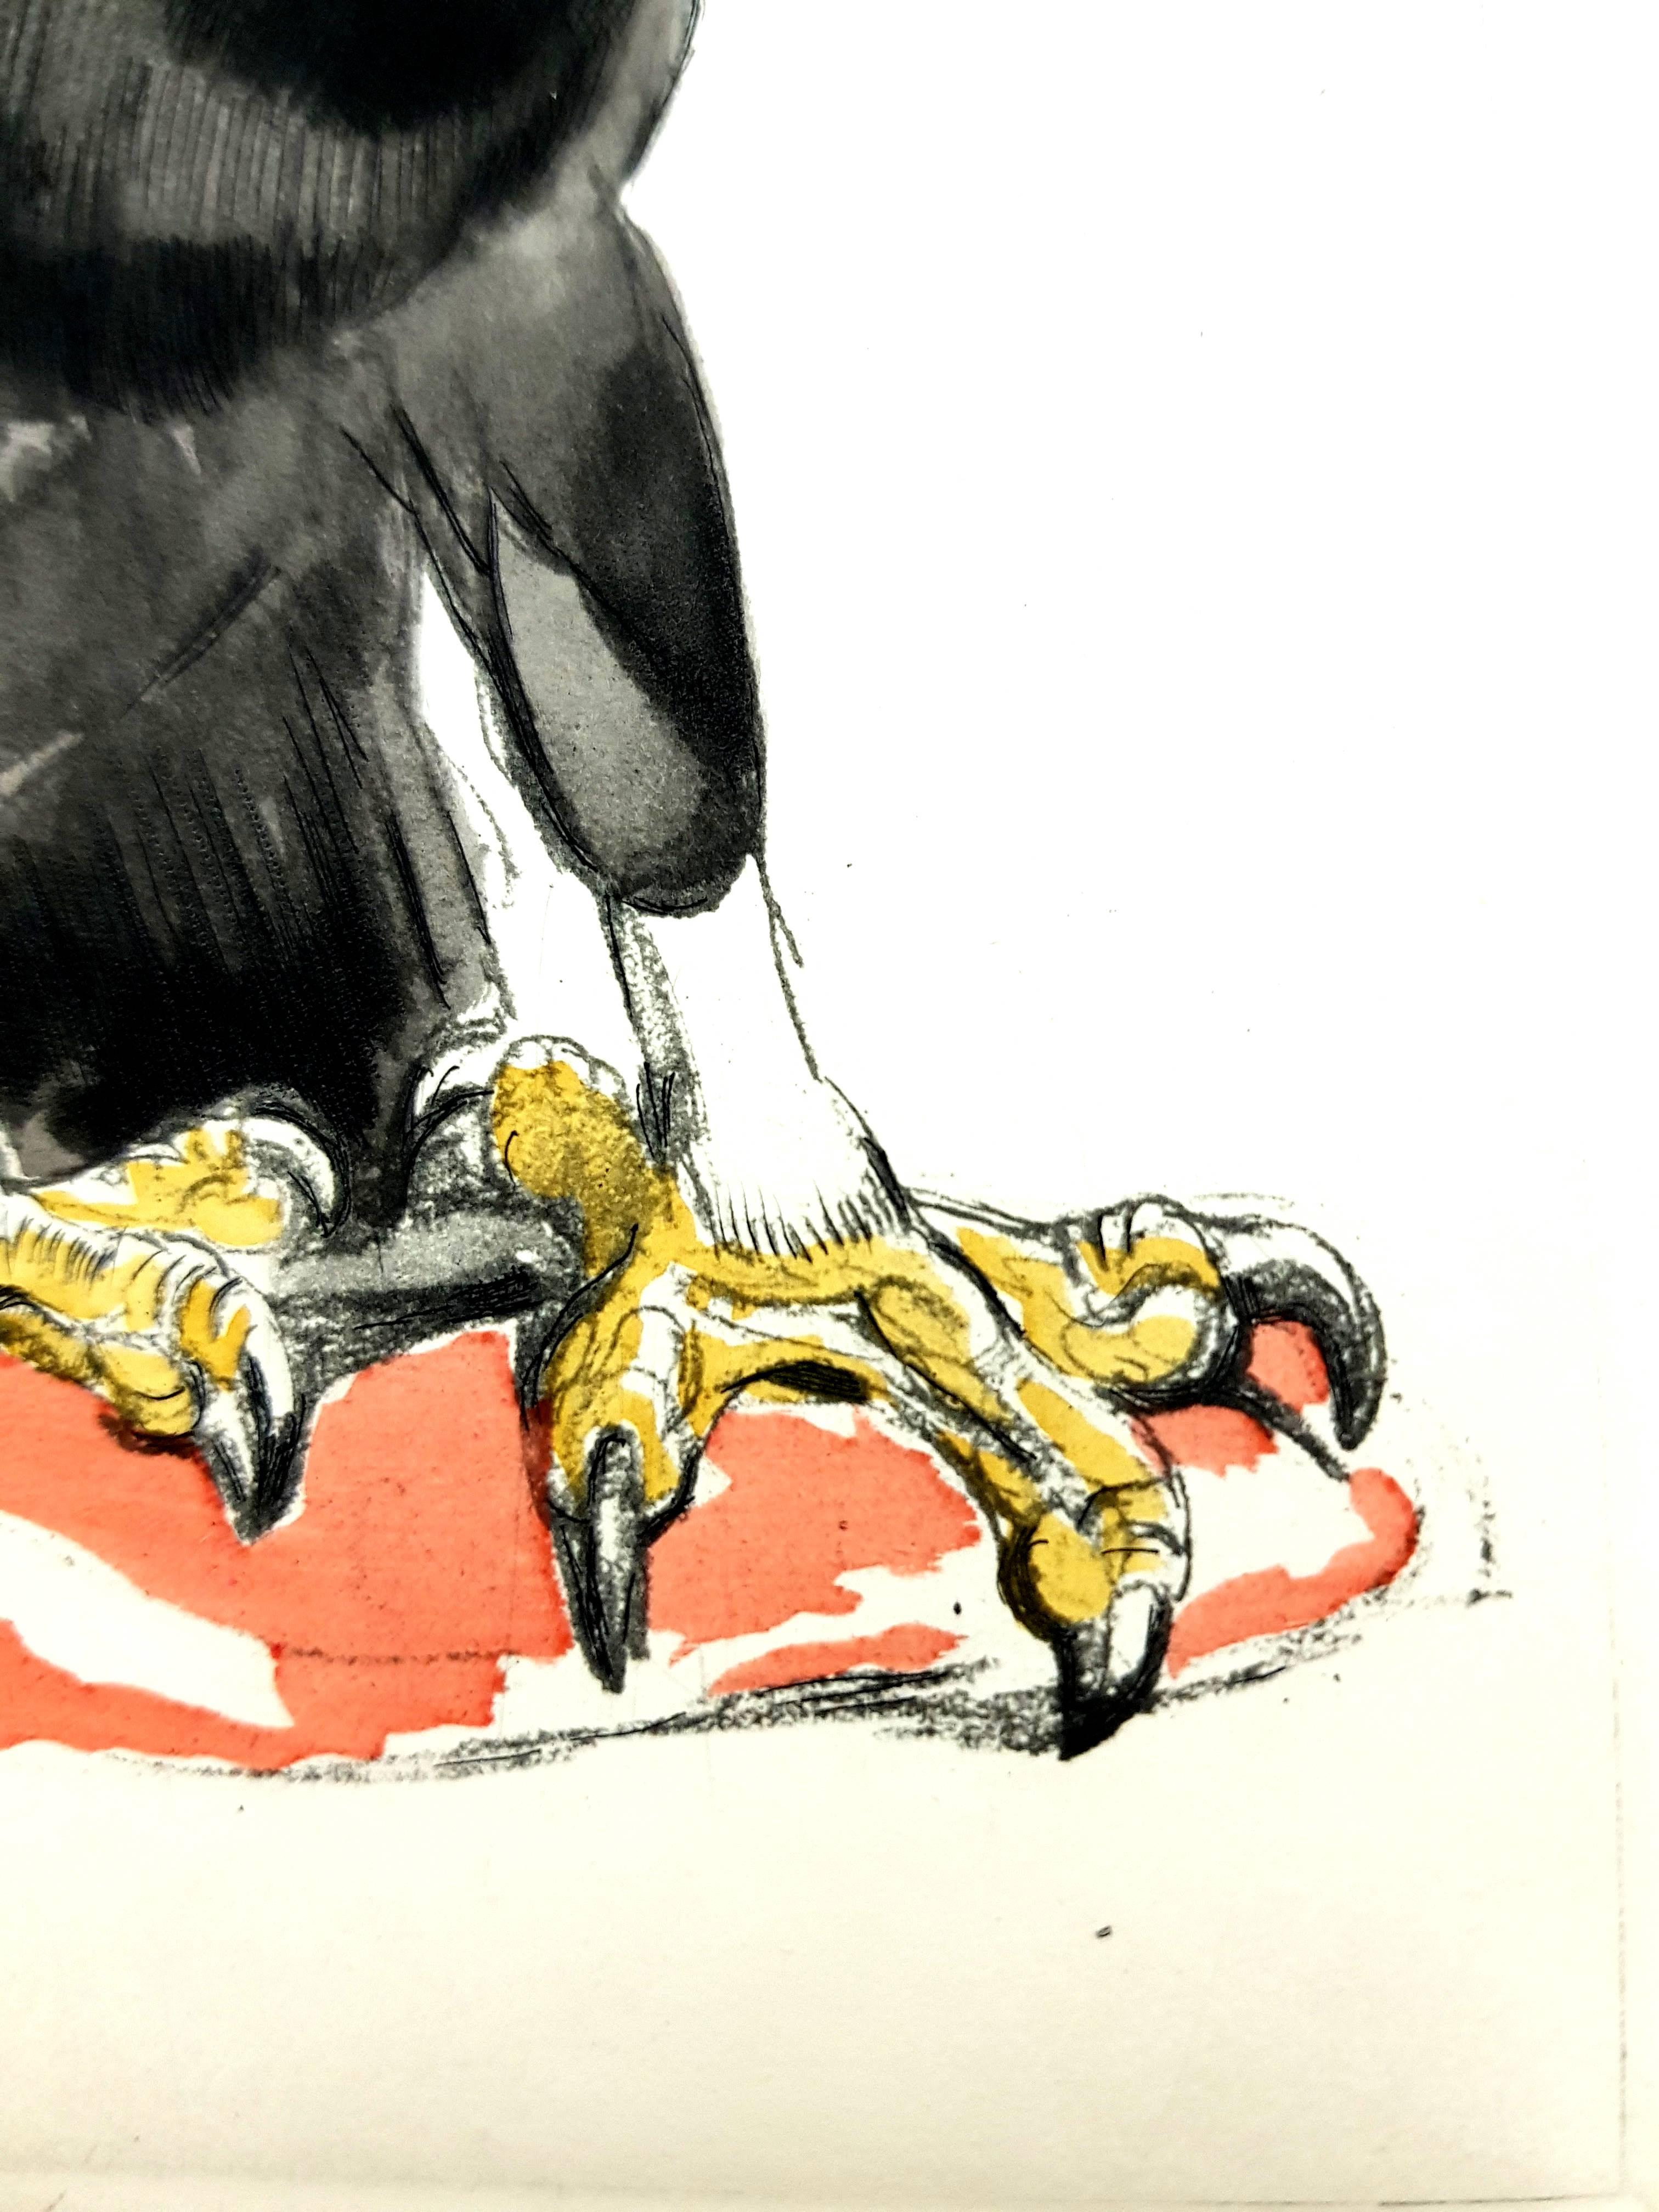 Paul Jouve - Adler - Original-Gravur
Editions Rombaldi, Paris, 1950. 
Kopie auf Velin Crème de Rives
Kunstwerke von Paul Jouve.
Original-Kupferstich mit Pochoir gehöht. 

Paul Jouve, der als einer der berühmtesten Tiermaler der ersten Hälfte des 20.